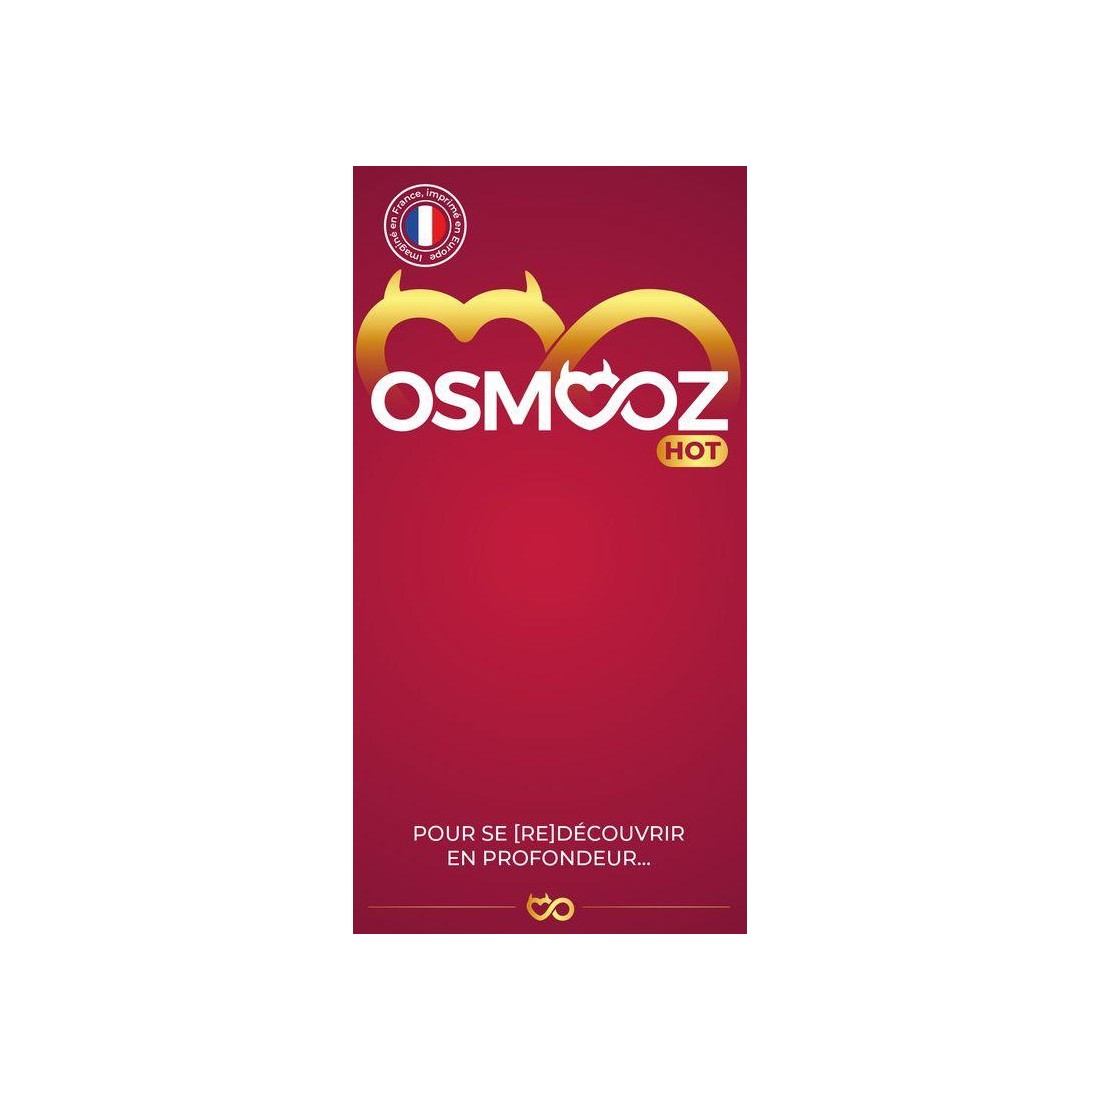 Jeu d'ambiance : Osmooz Hot (ATM Gaming) - Jooniz